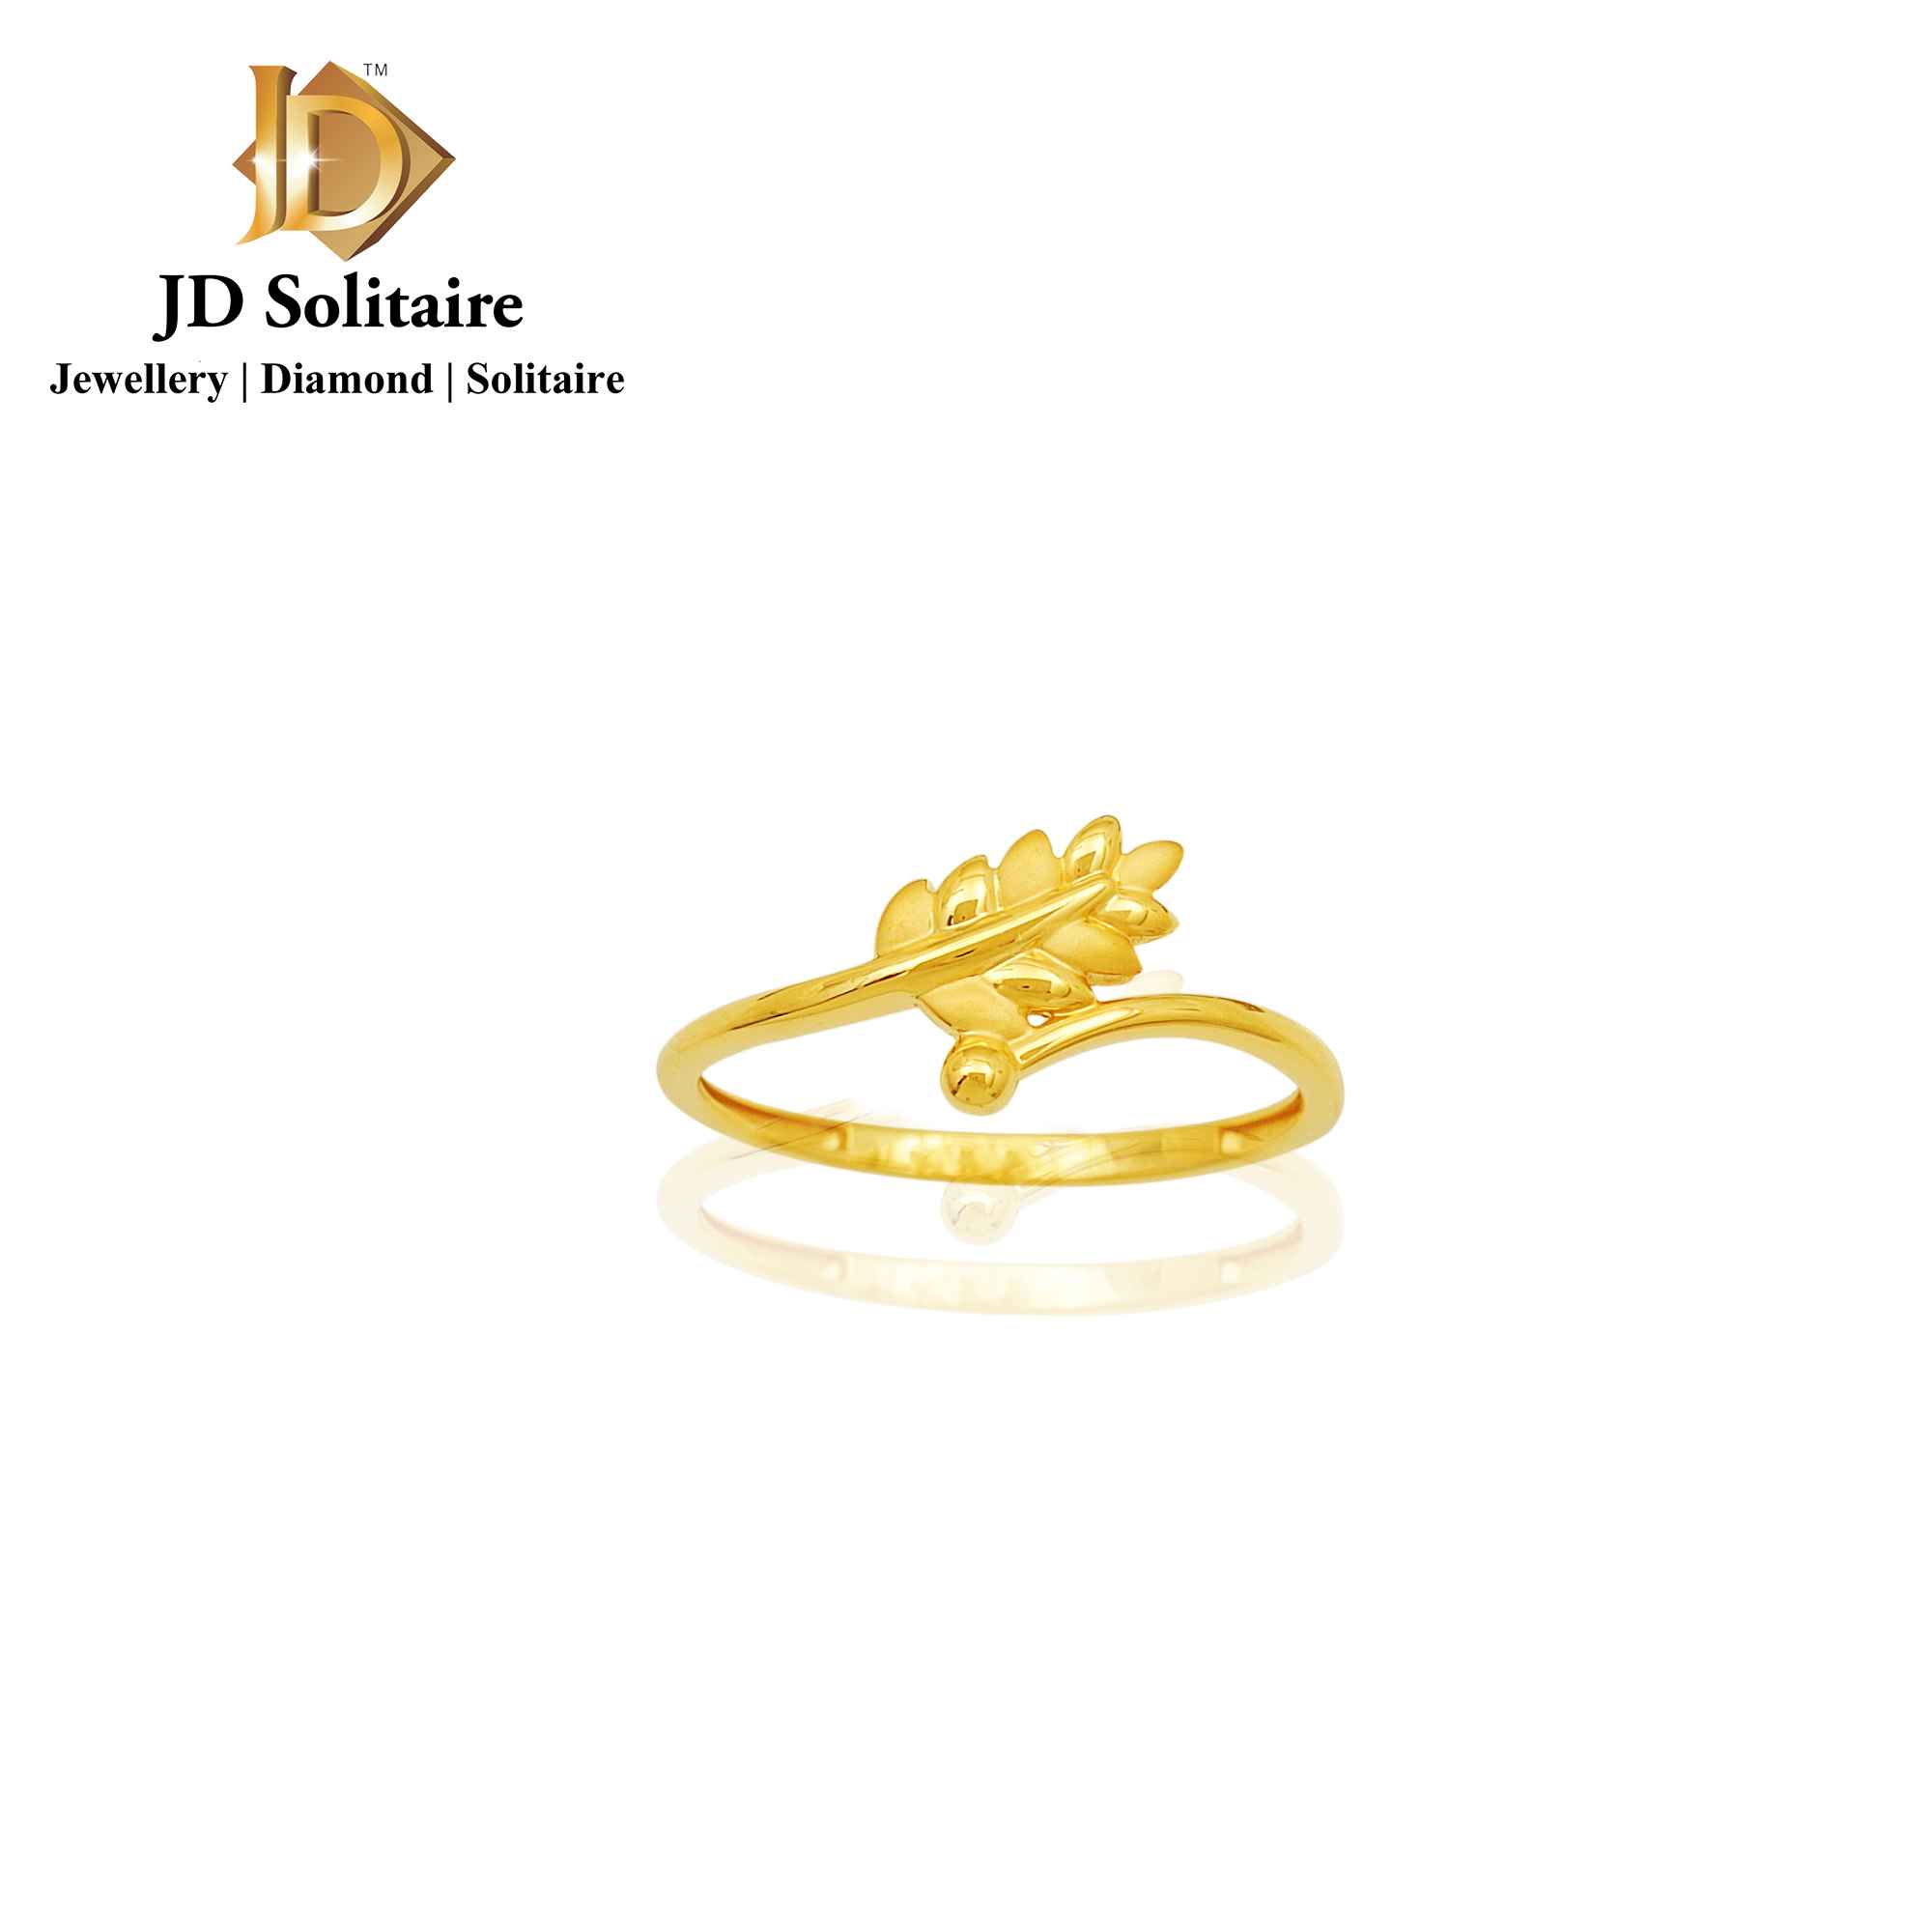 Women's Daily Wear Real Diamond Ring at 17400.00 INR in Mumbai | Nvision  Diamjewel Llp